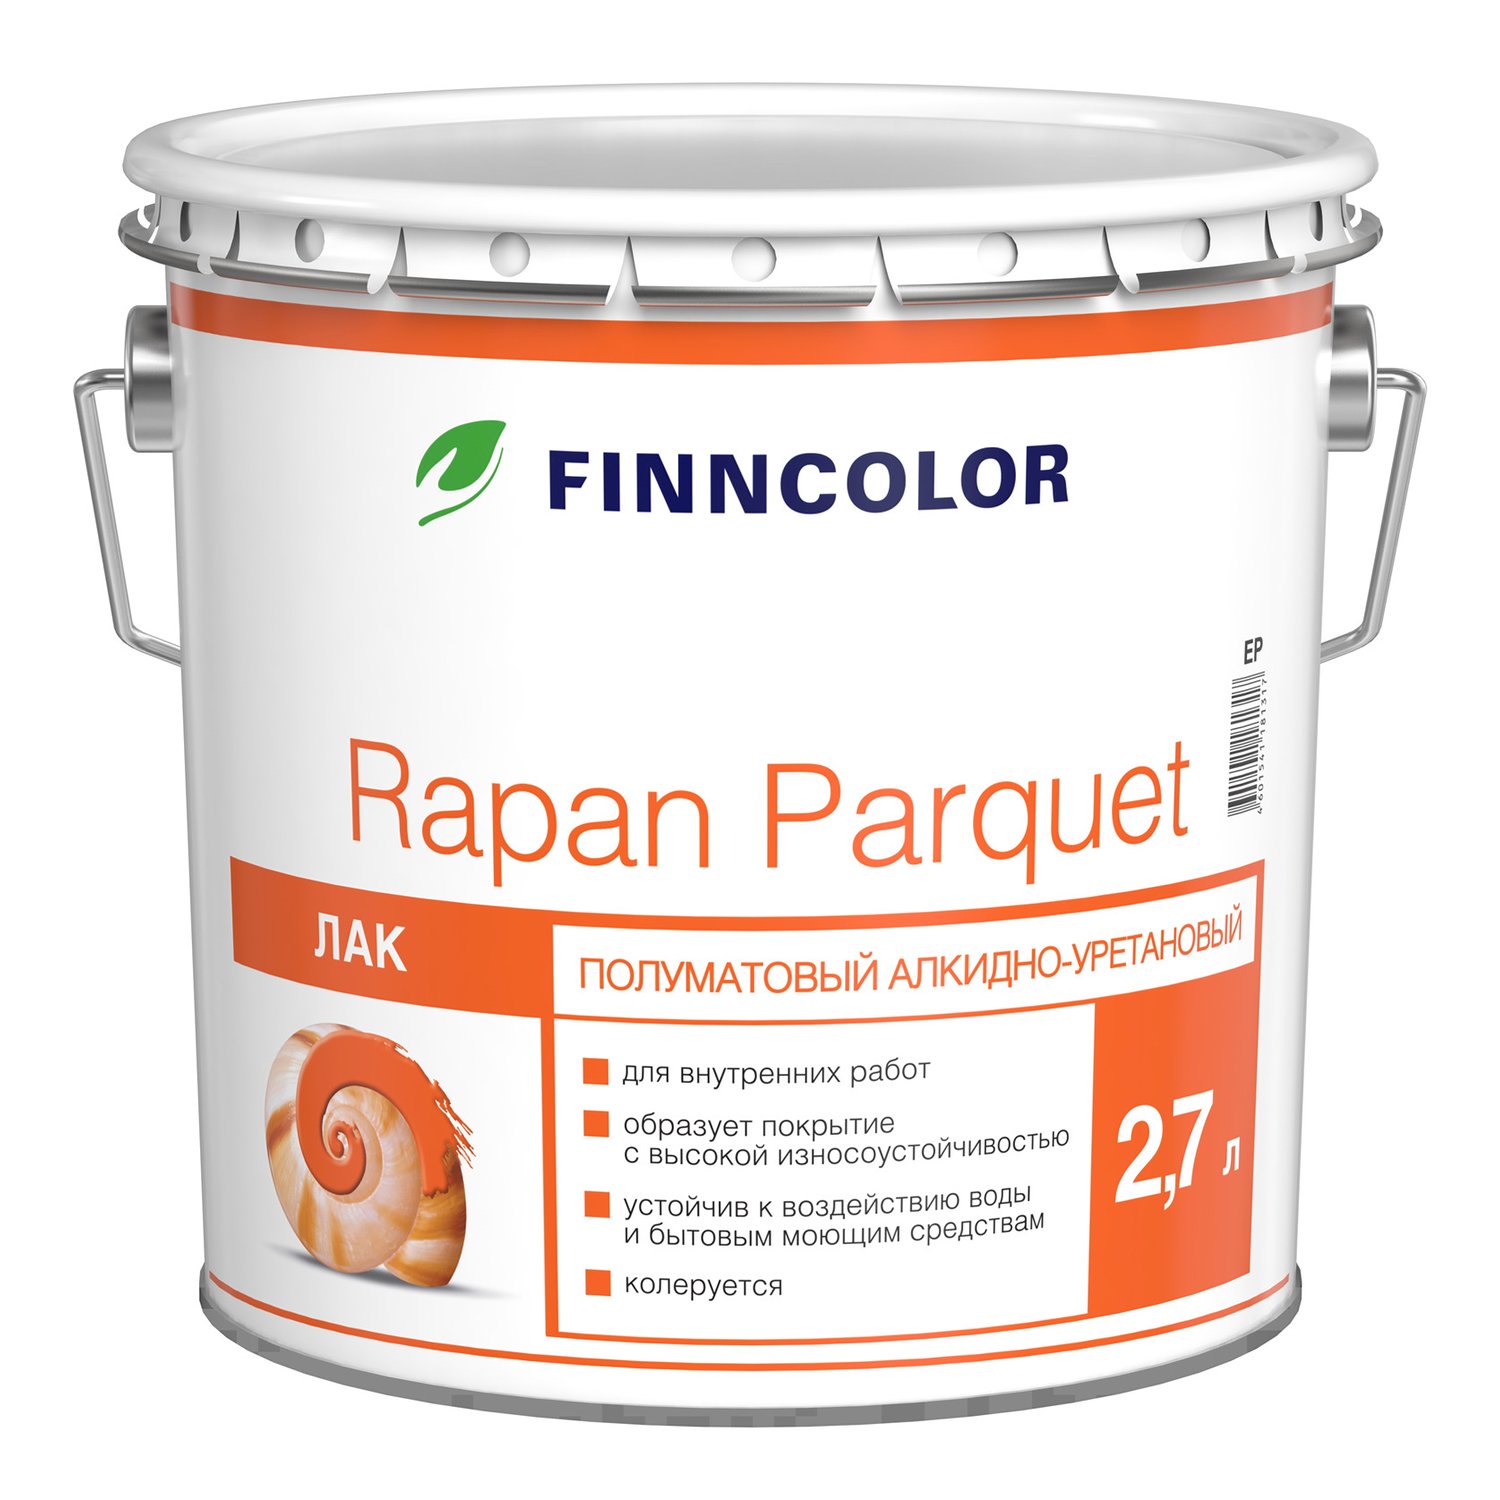 Finncolor Rapan Parquet, 2.7 л, Лак паркетный глянцевый